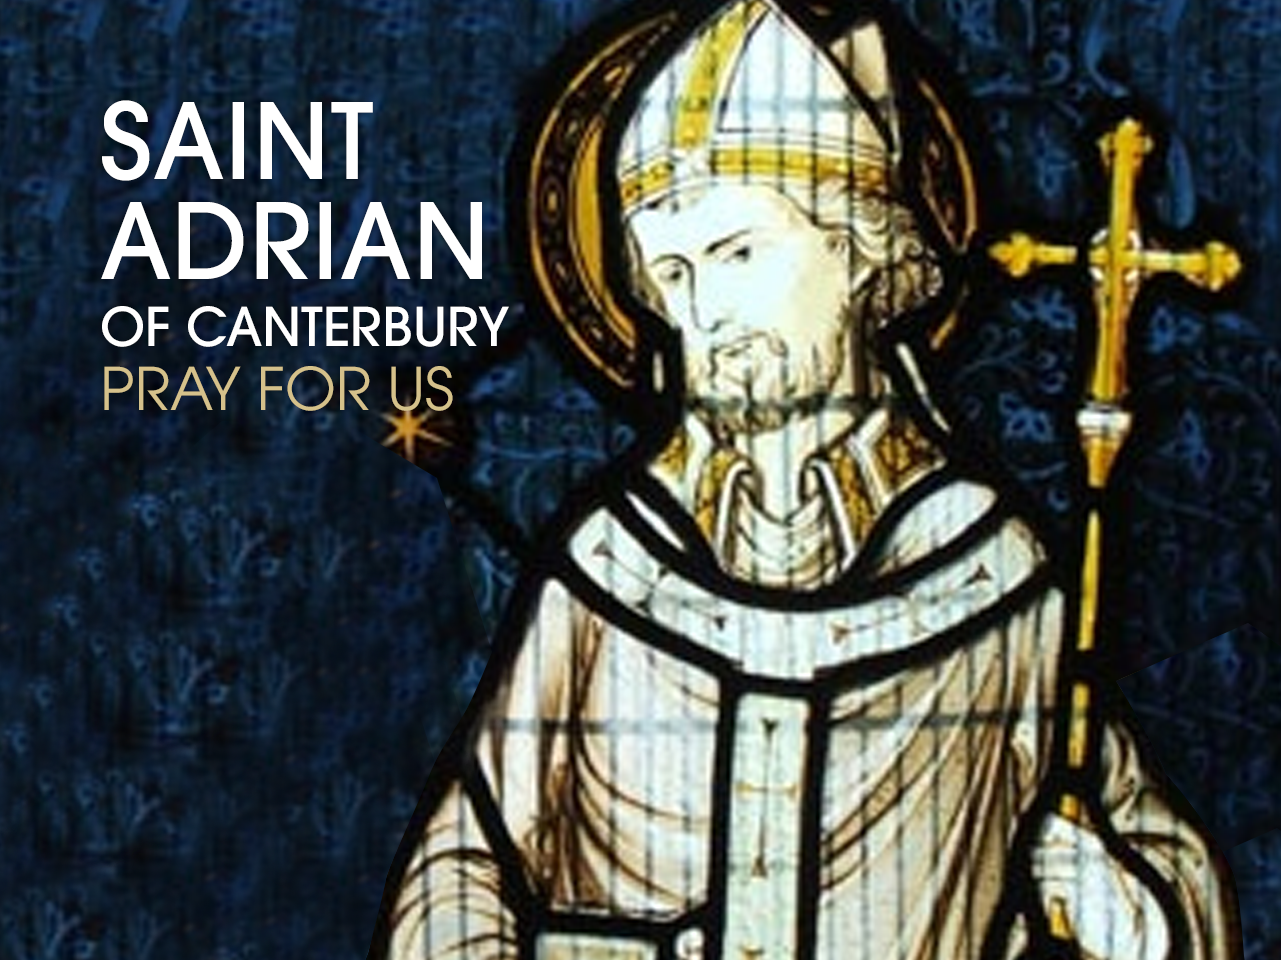 St. Adrian of Canterbury